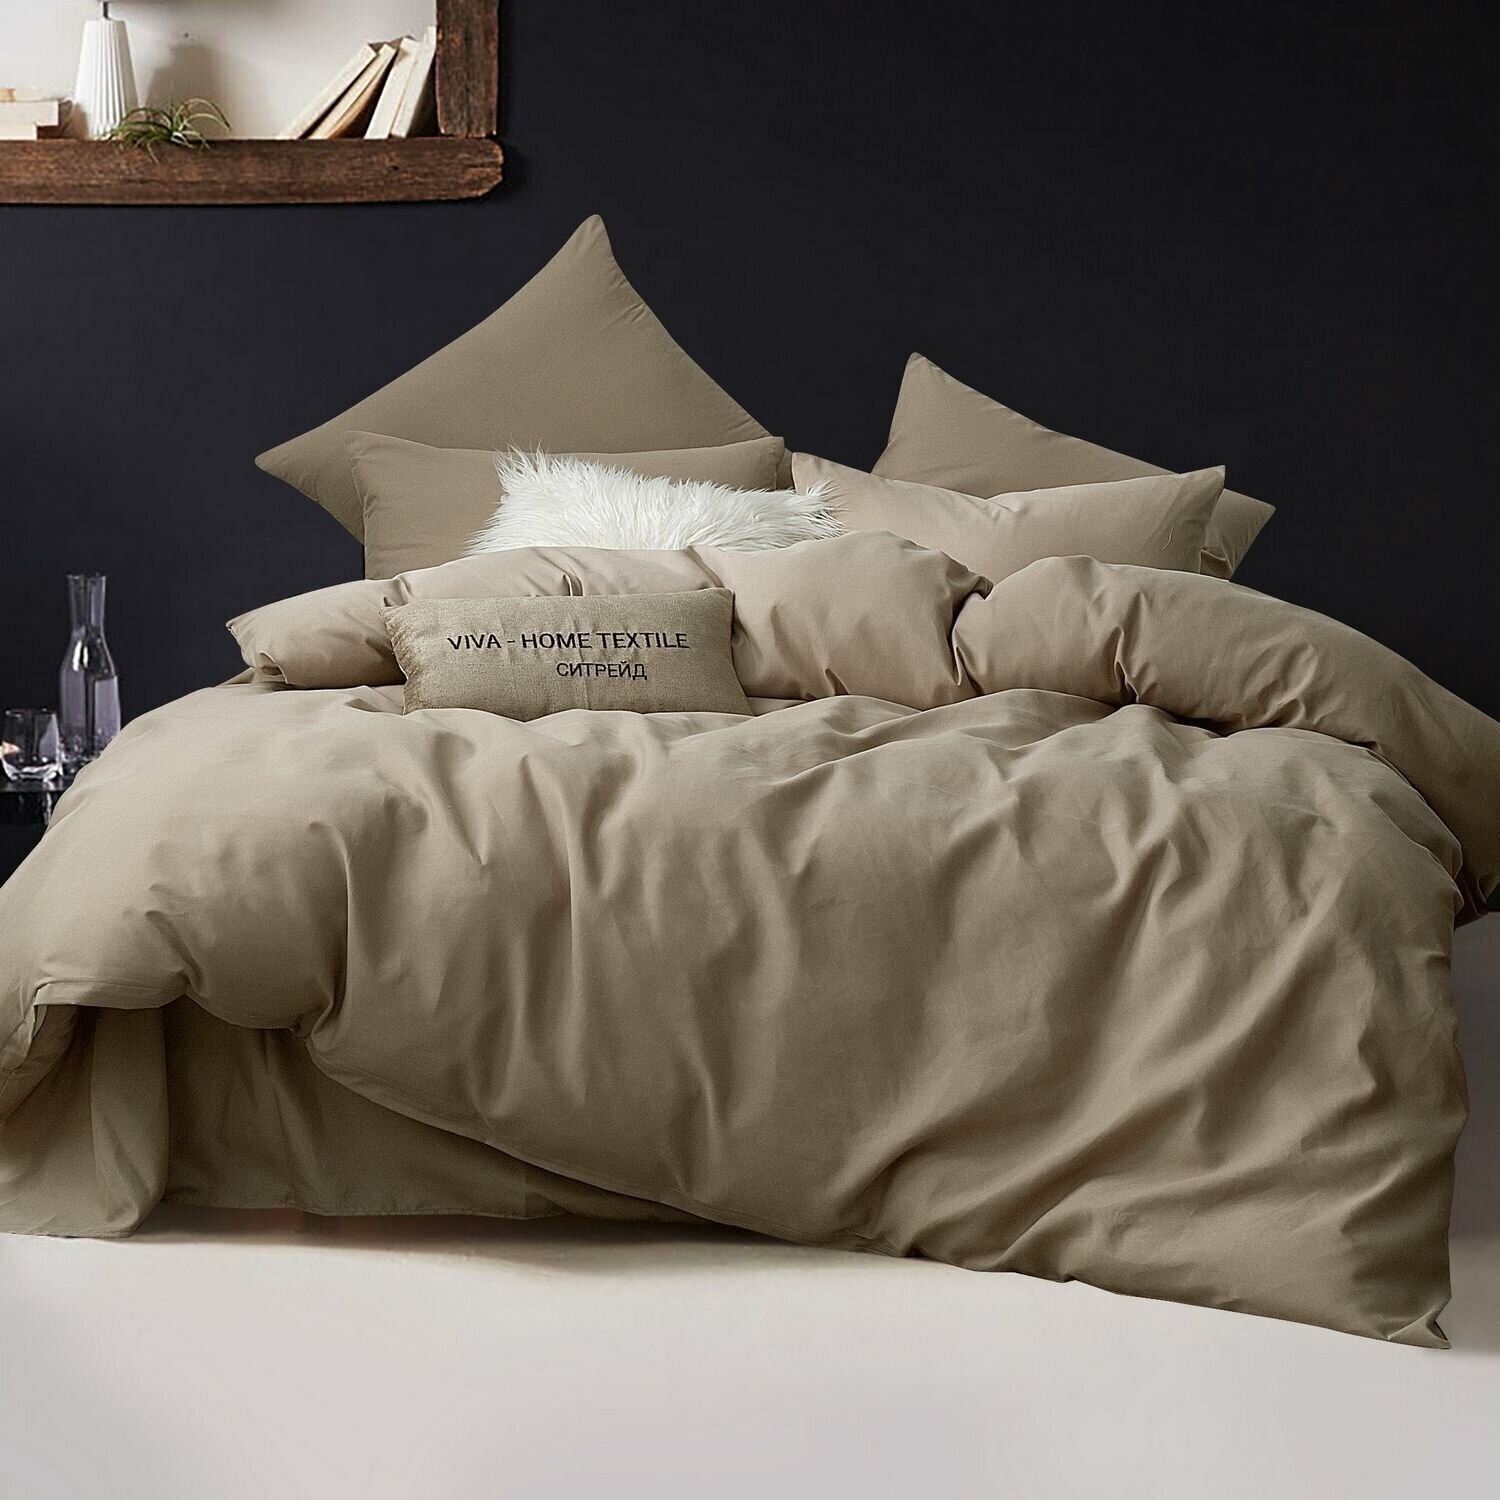 Комплект постельного белья VIVA-HOME TEXTILE Однотонный Сатин, евро, 4 наволочки 70х70, 50х70